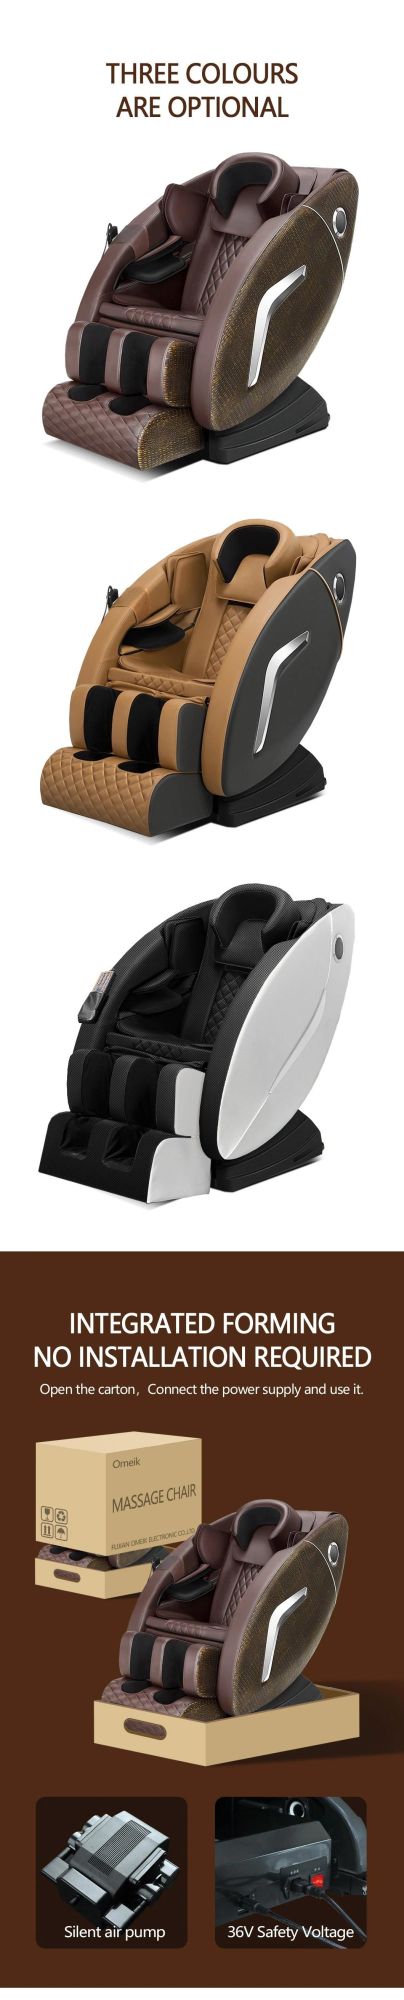 Omeik Best Selling Cheap Luxury Multifunction Full Body Zero Gravity Massage Chair